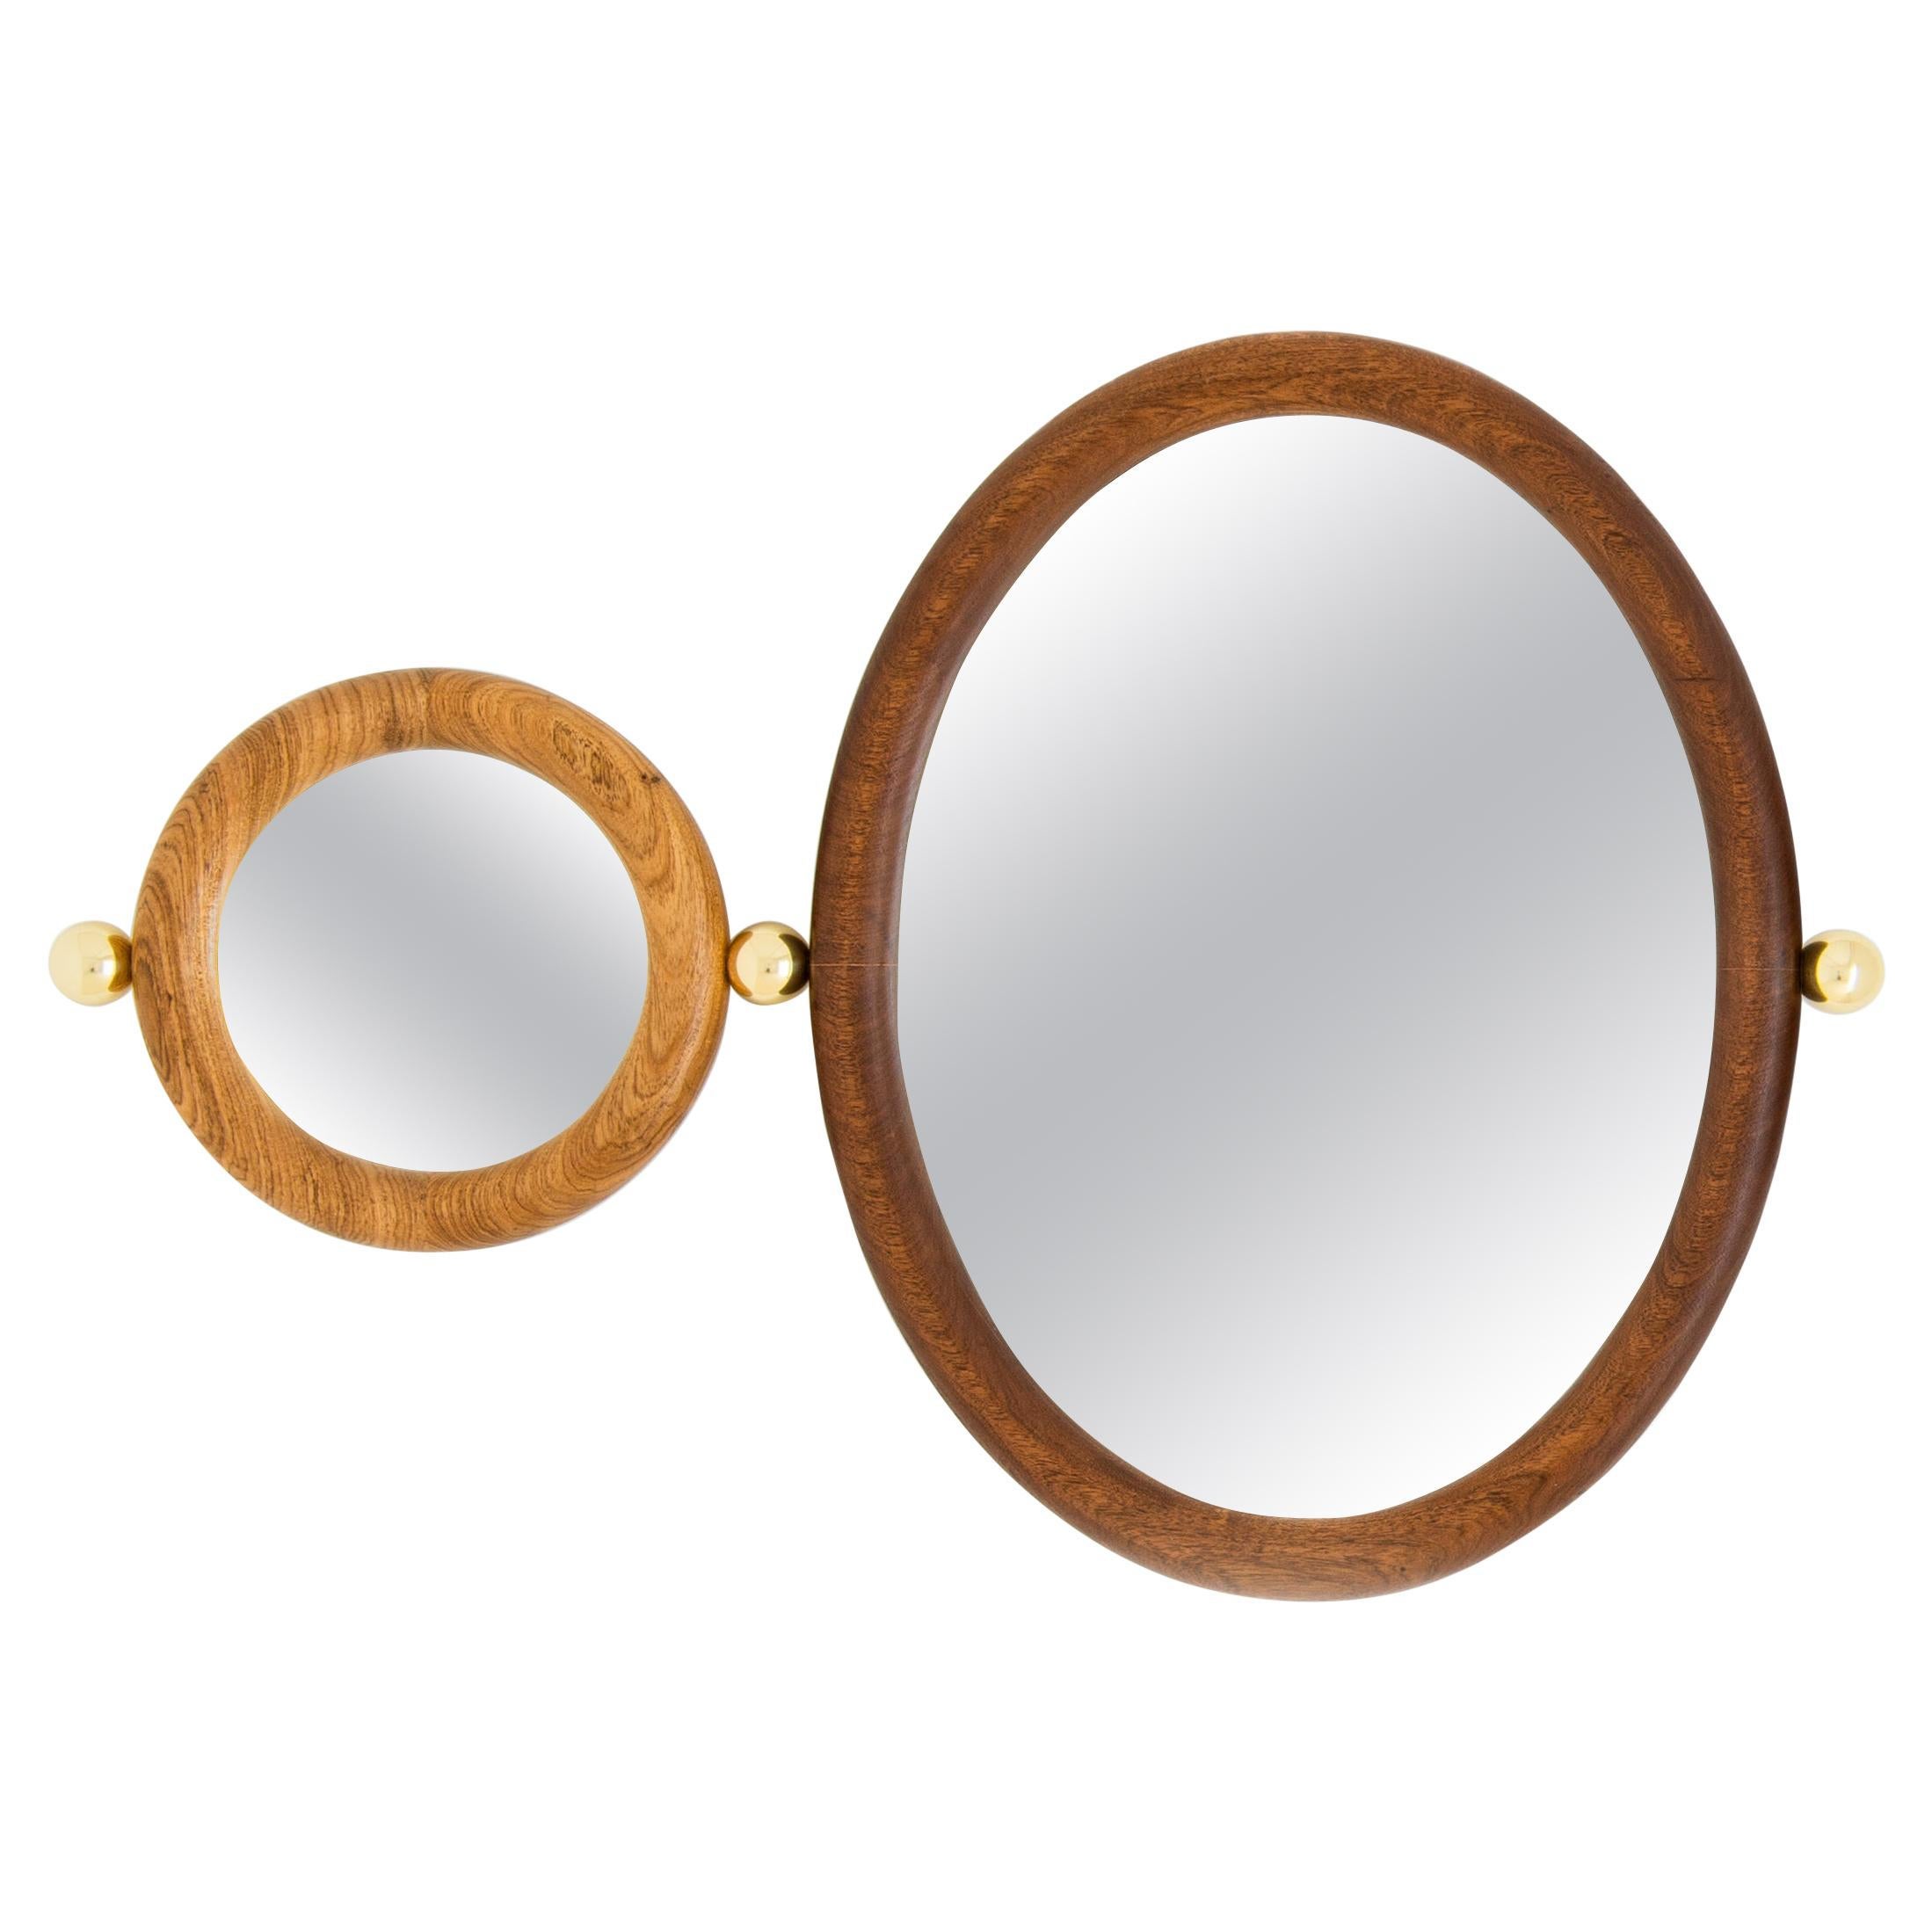 Set of 2 Aro Mirrors by Leandro Garcia Contemporary Brazil Design